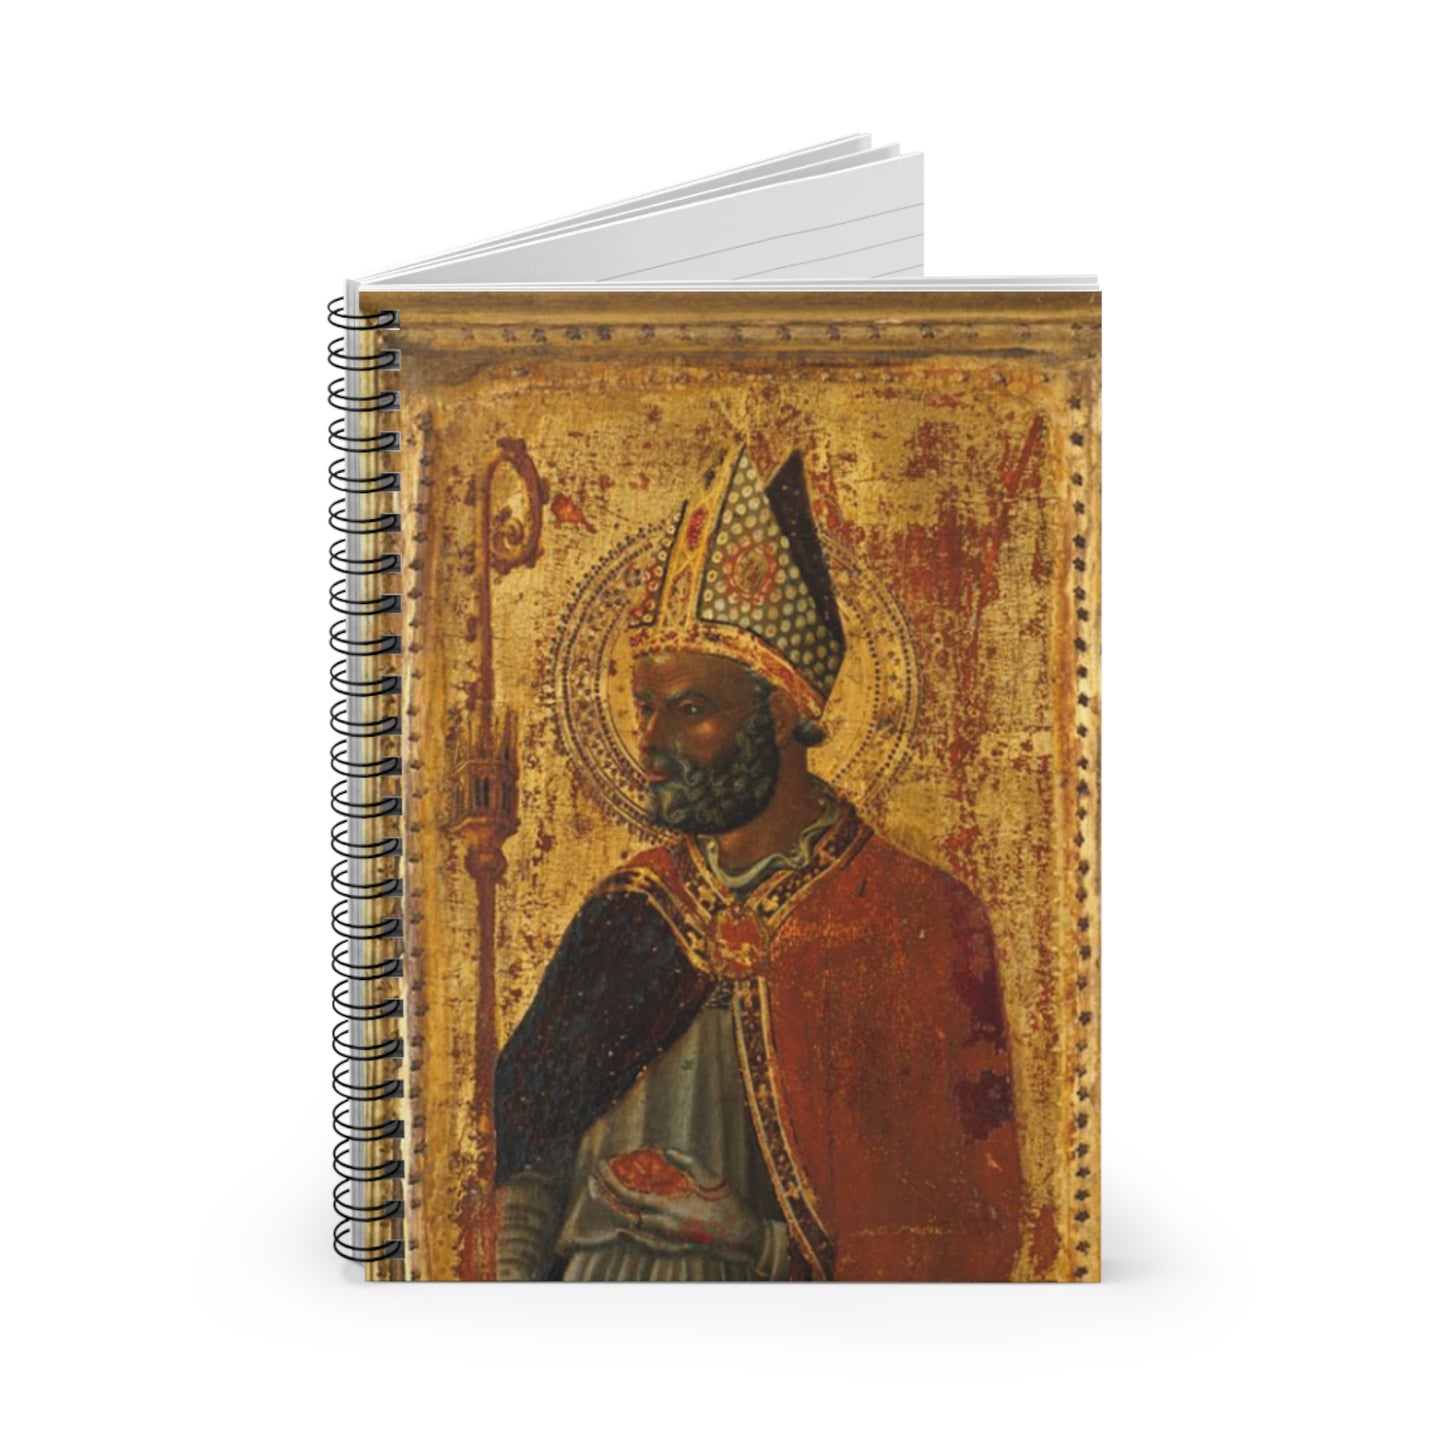 Saint Nicholas-Spiral Notebook Ruled Line